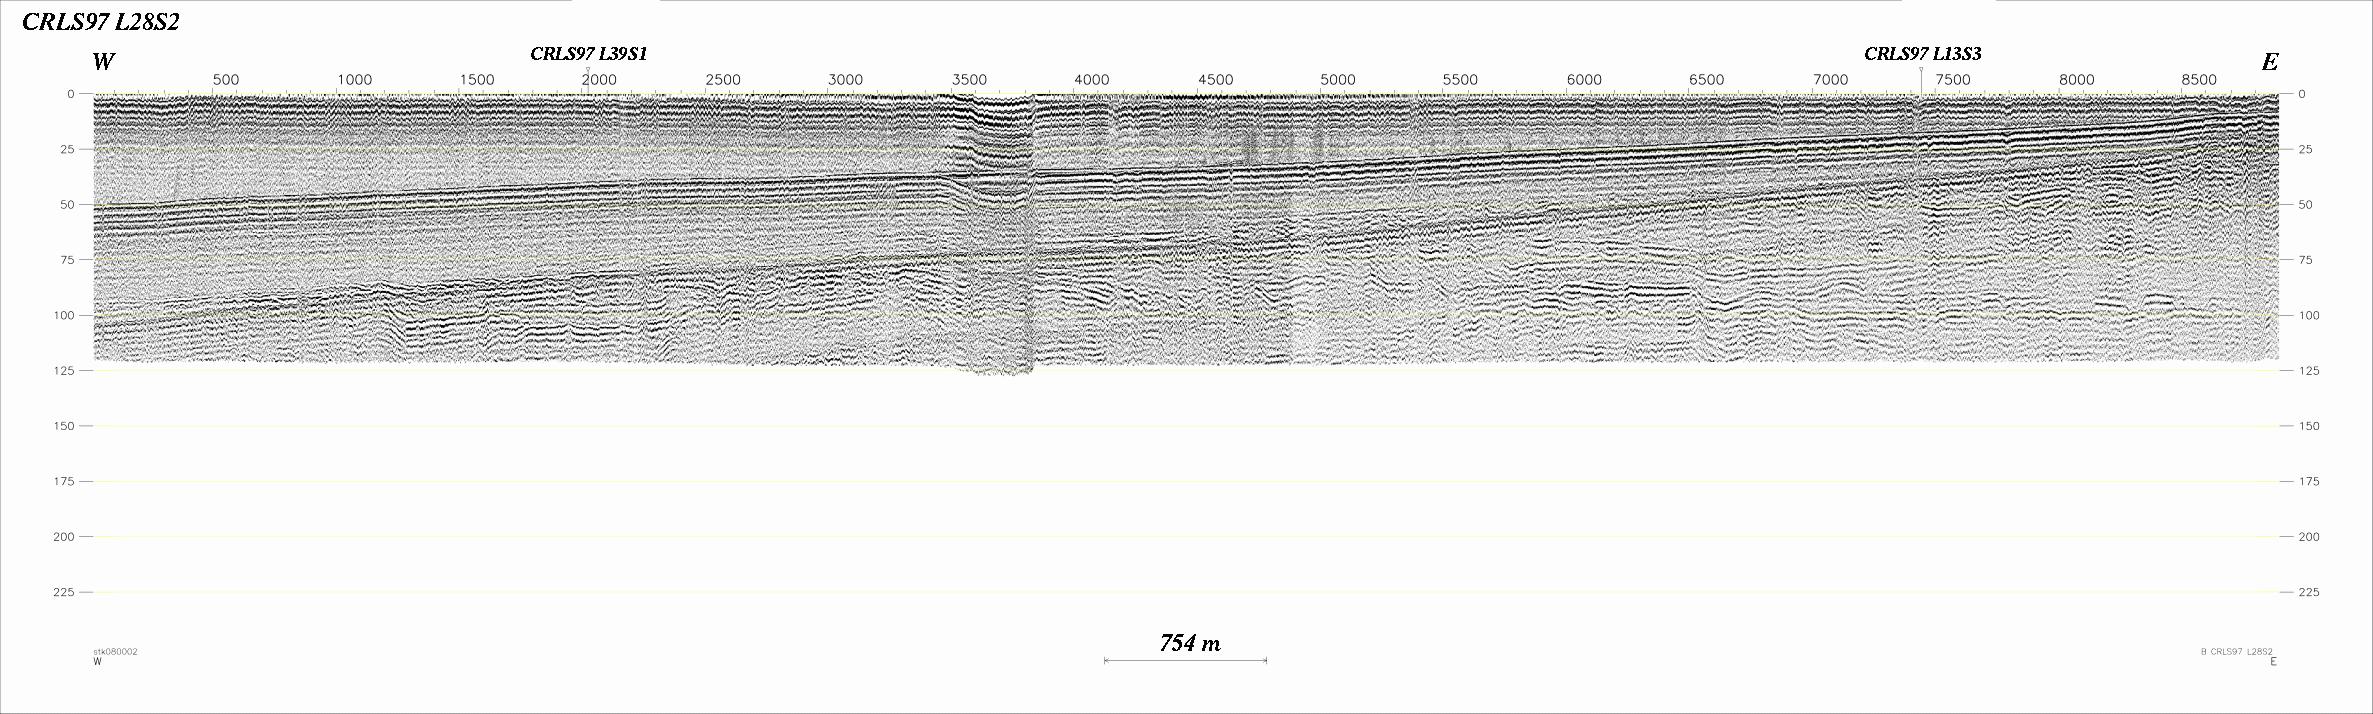 Seismic Reflection Profile Line No.: L28s2 (328464 bytes)